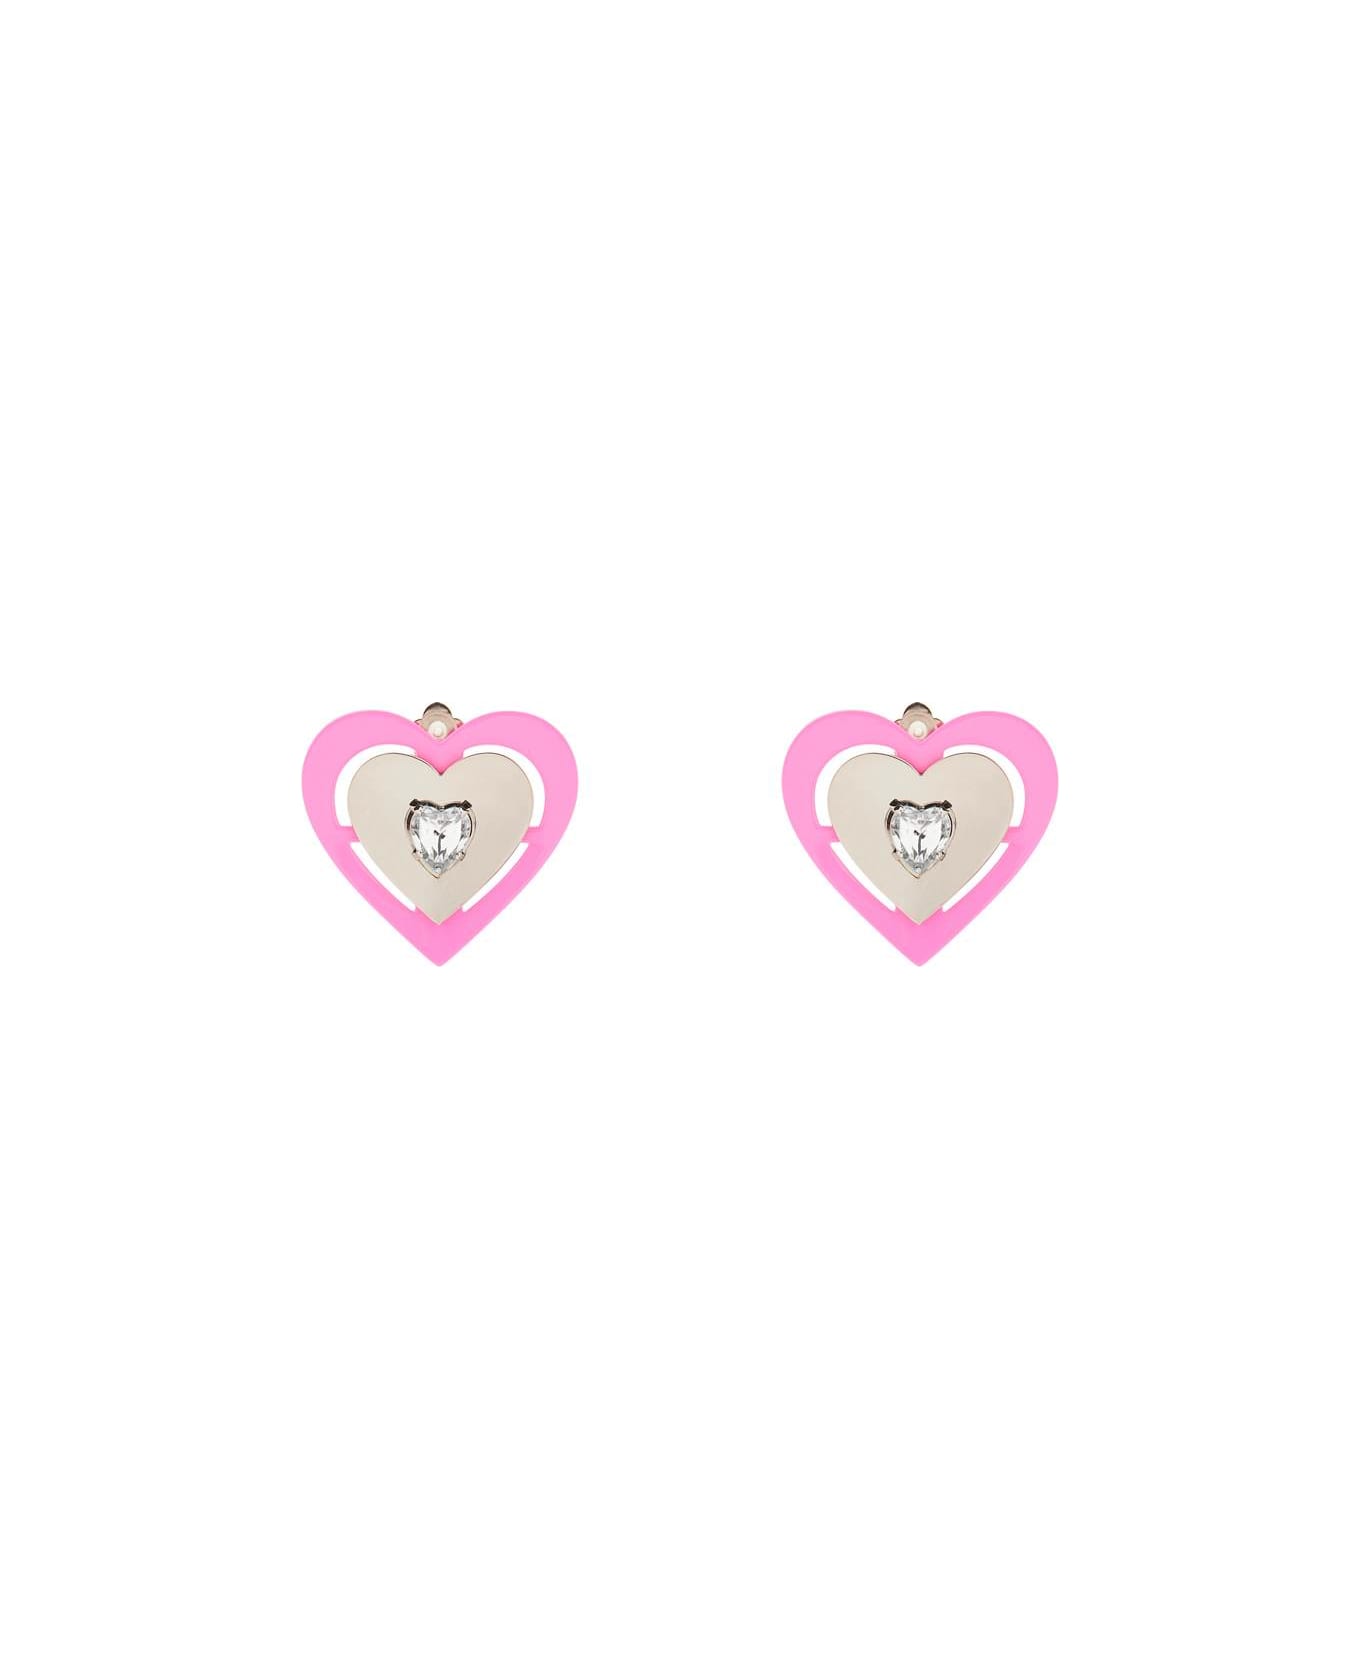 SafSafu 'pink Neon Heart' Clip-on Earrings - PINK (Silver)